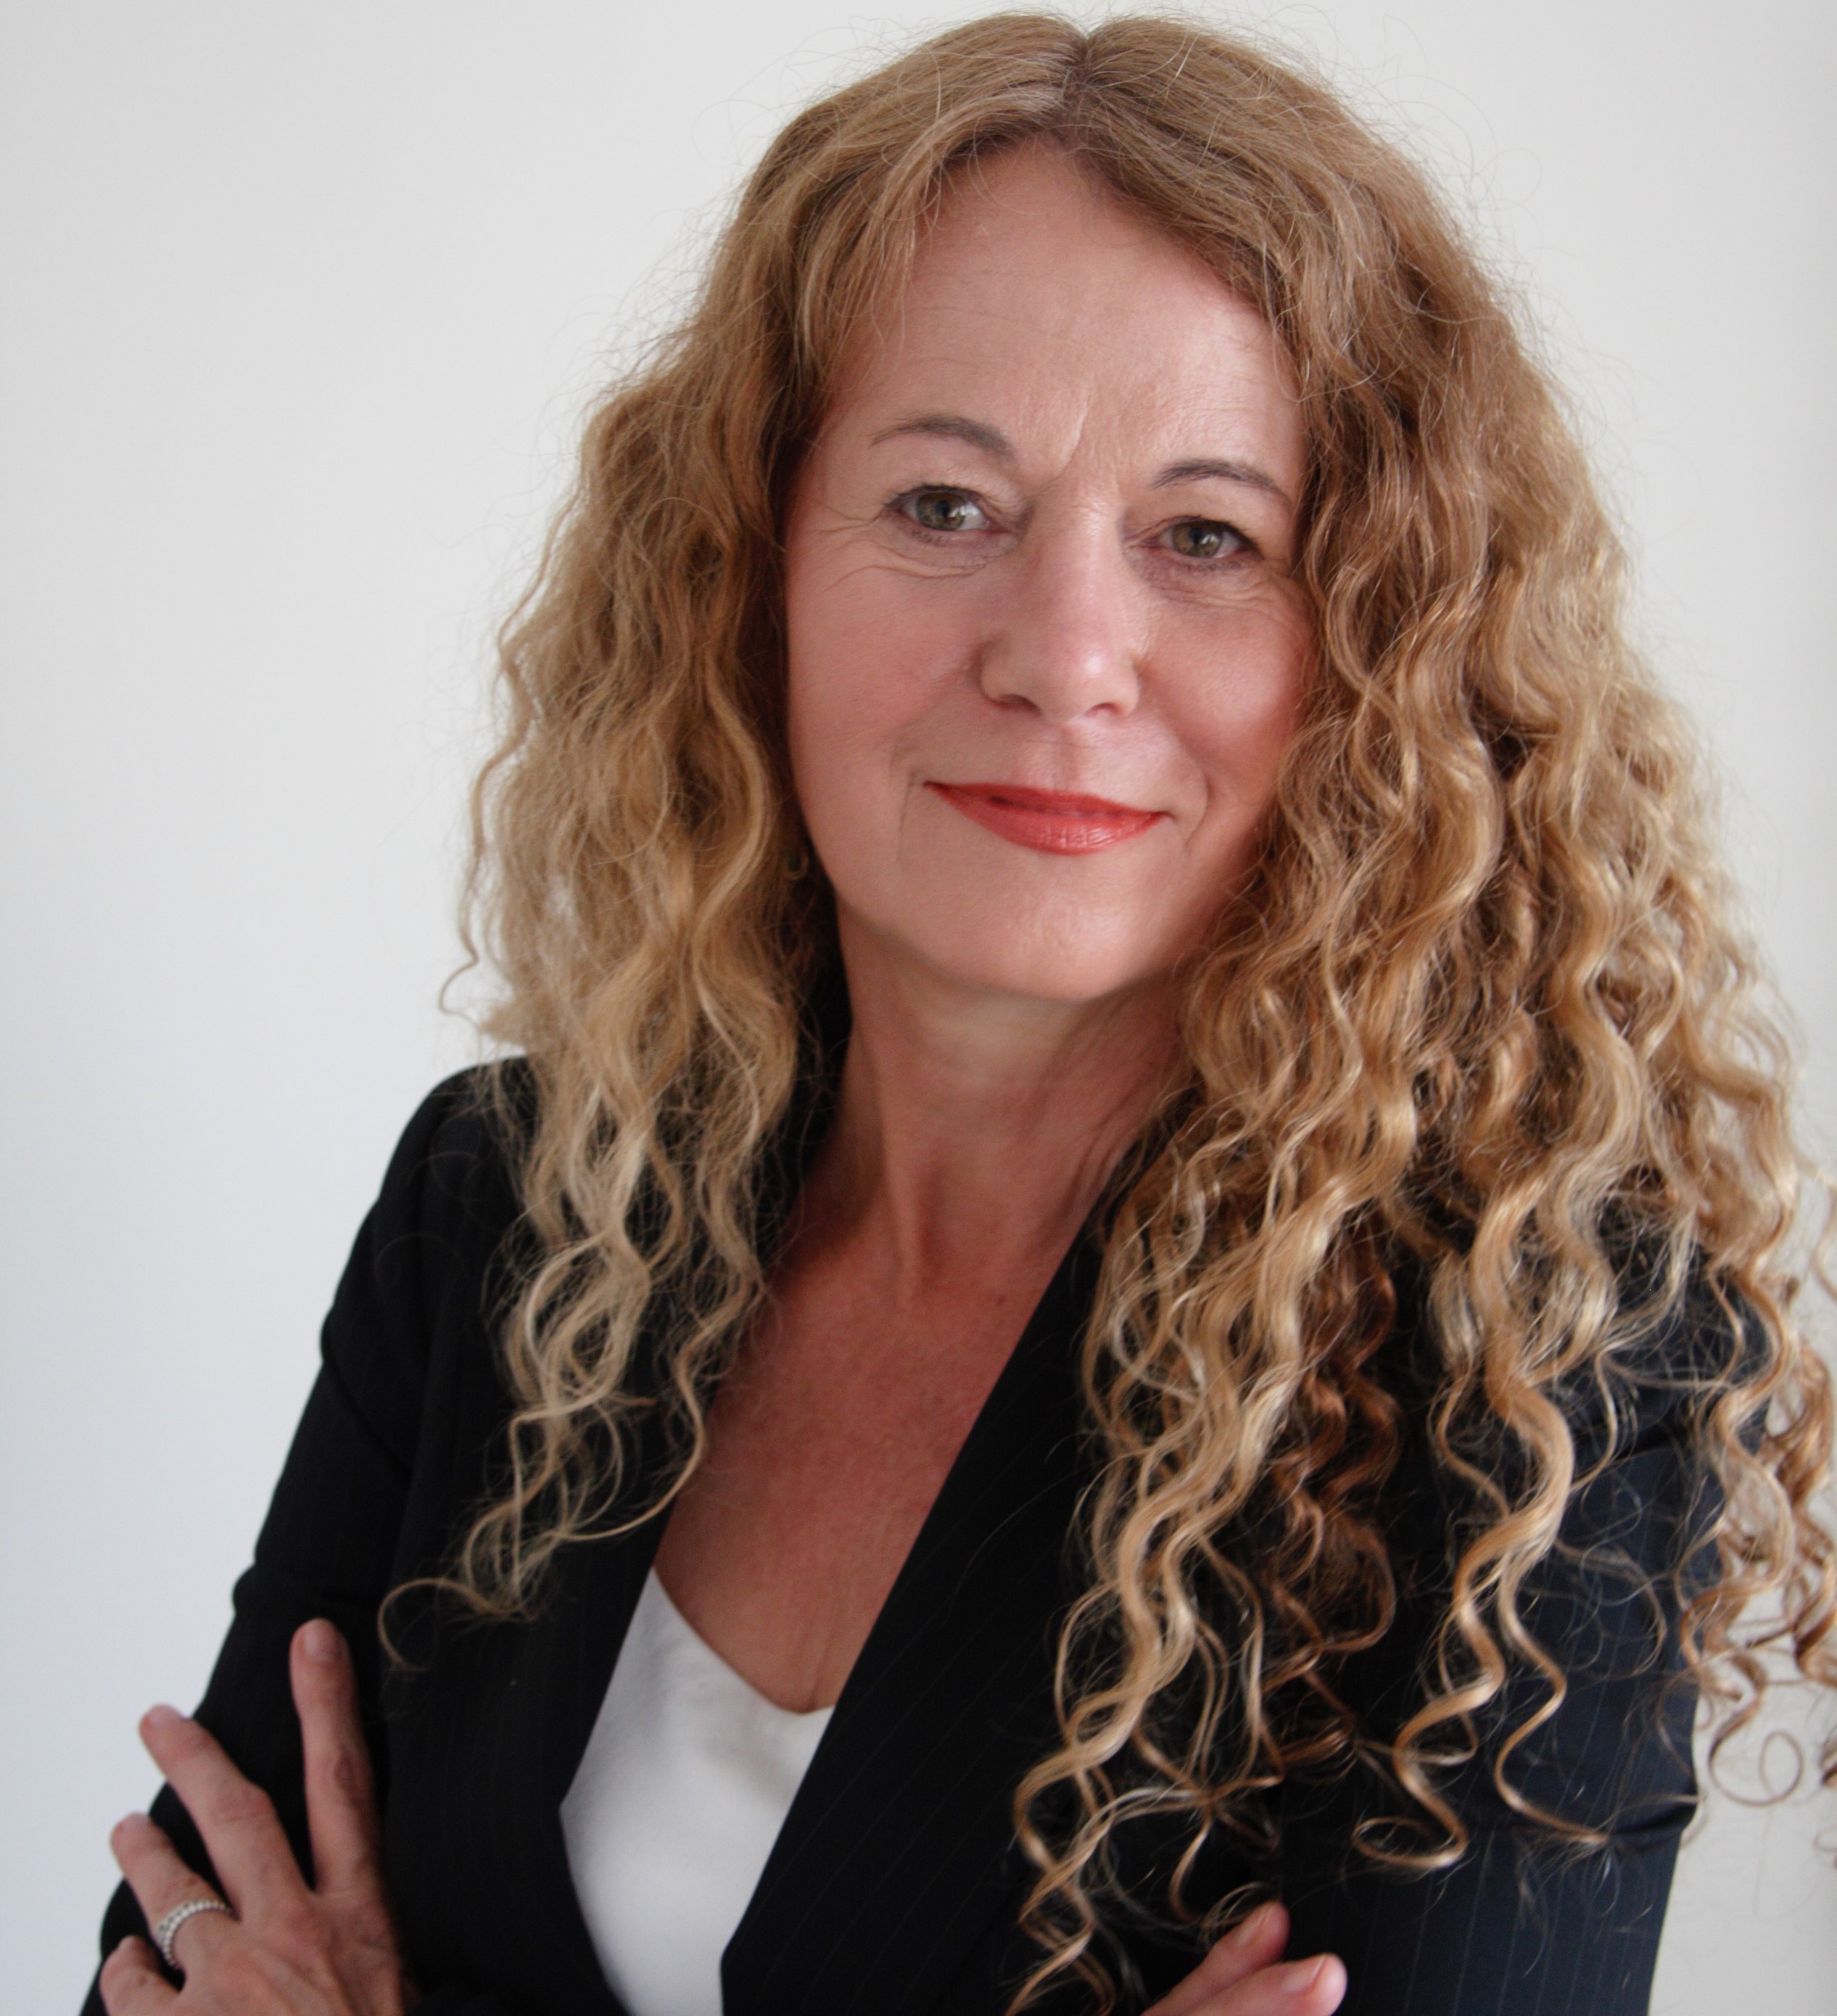 Rechtsanwältin und Mediatorin Claudia Rübener